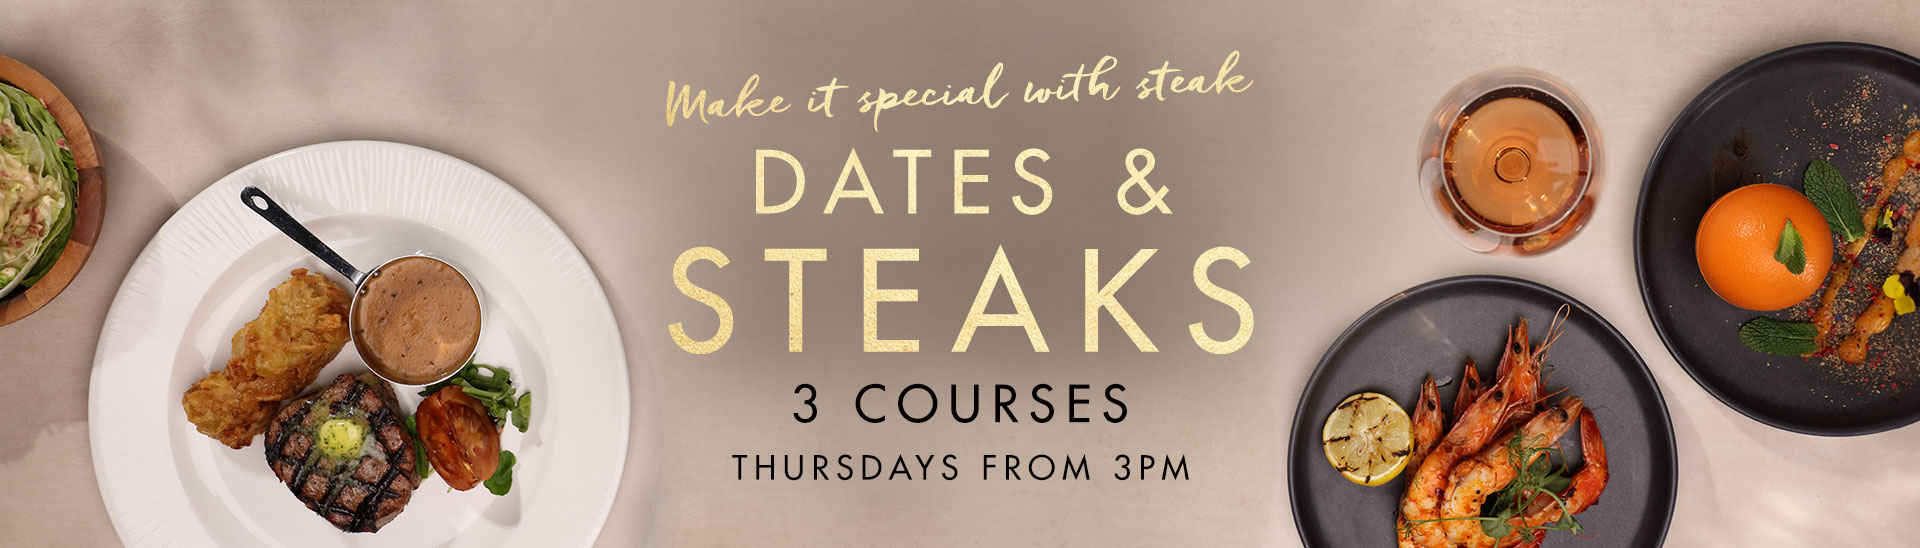 Dates & Steaks at Miller & Carter Middlewich